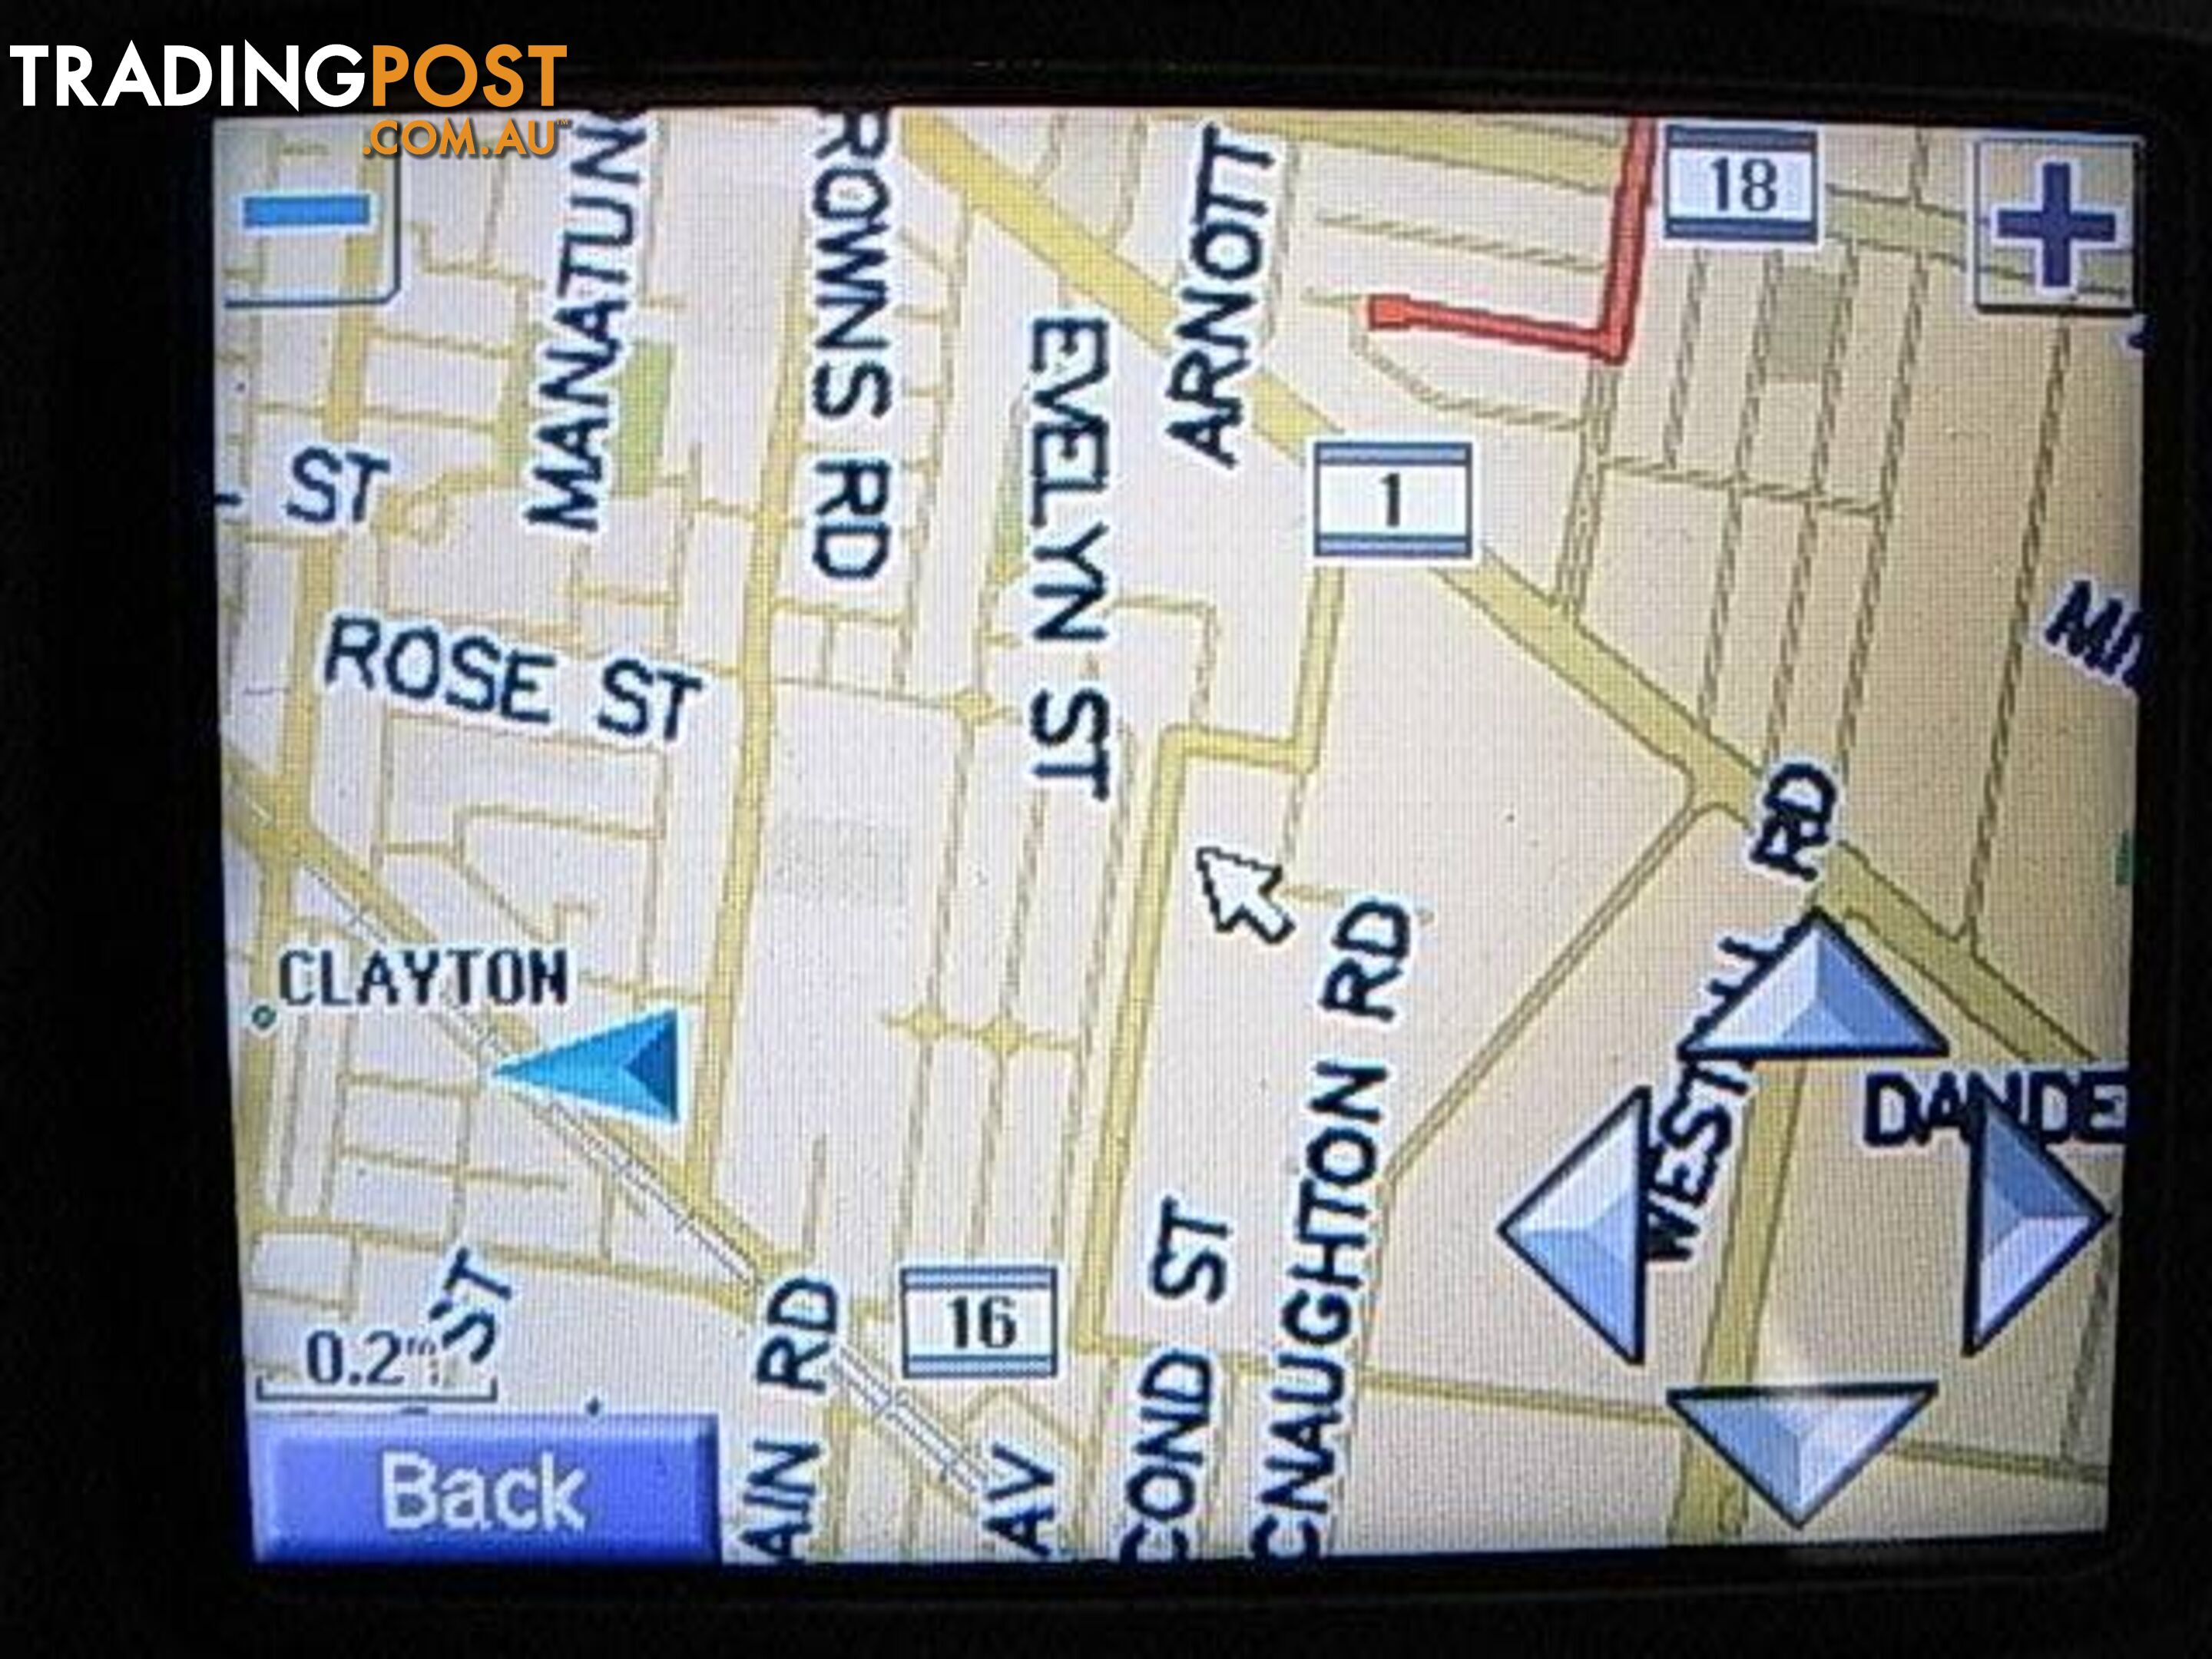 GARMIN STREET PILOT C320 GPS. good condition come with sd card